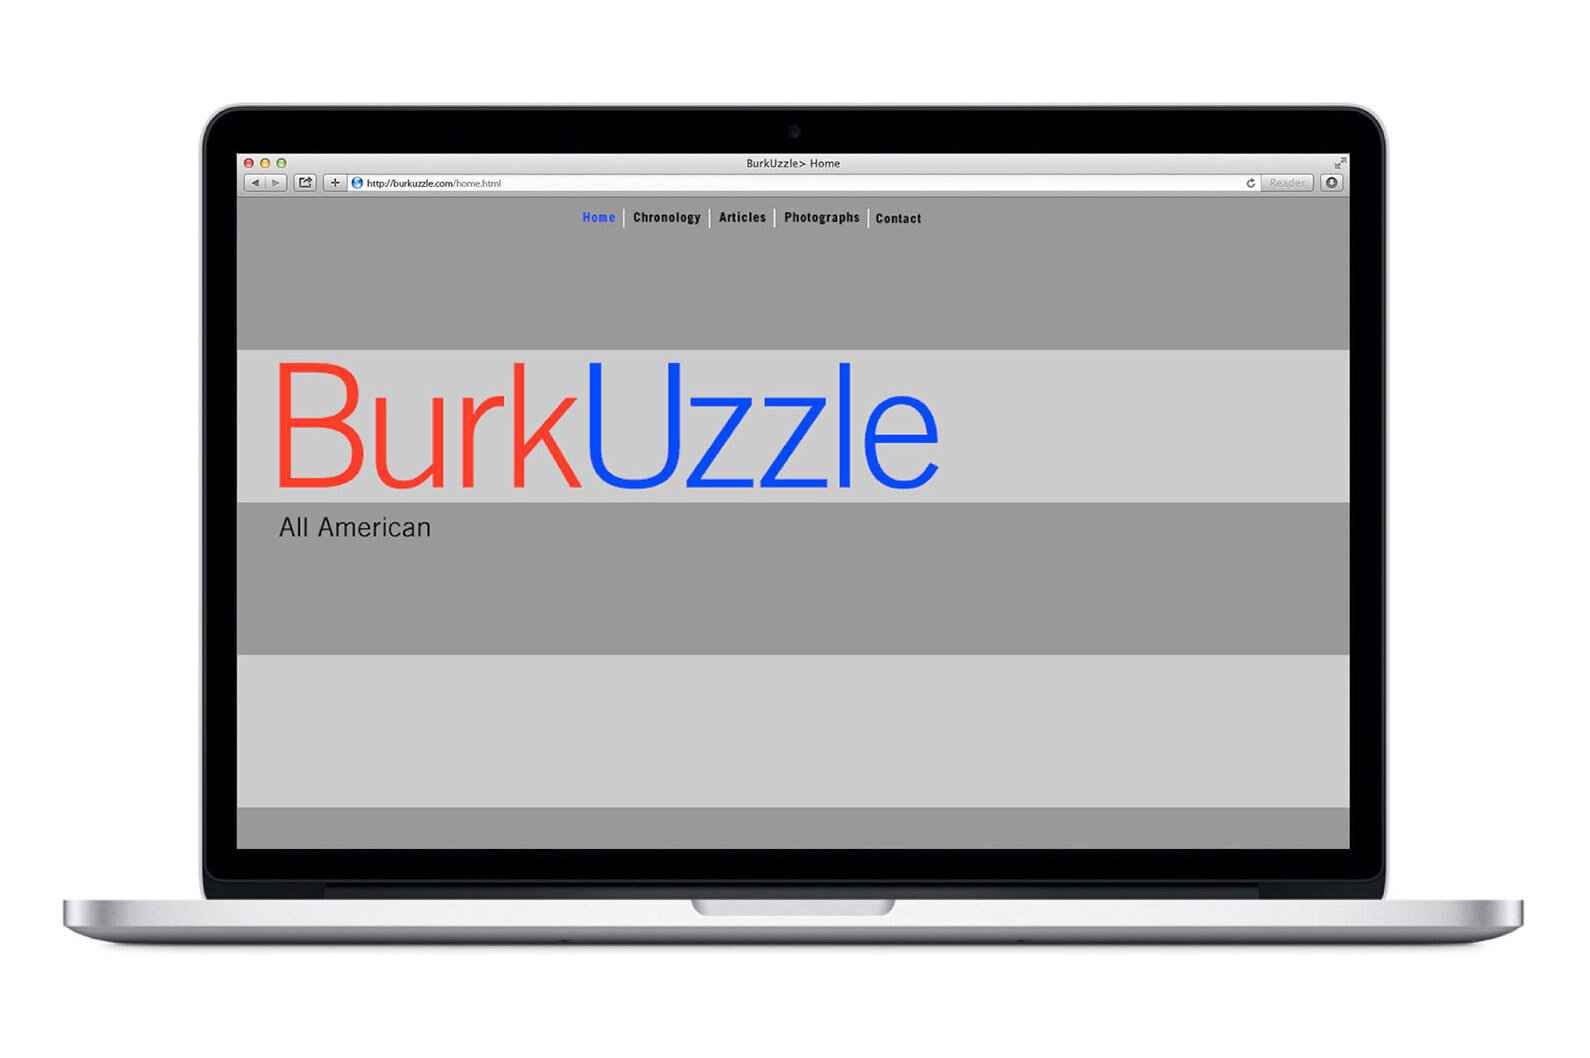 interactive_burkuzzle_pic1c.jpg